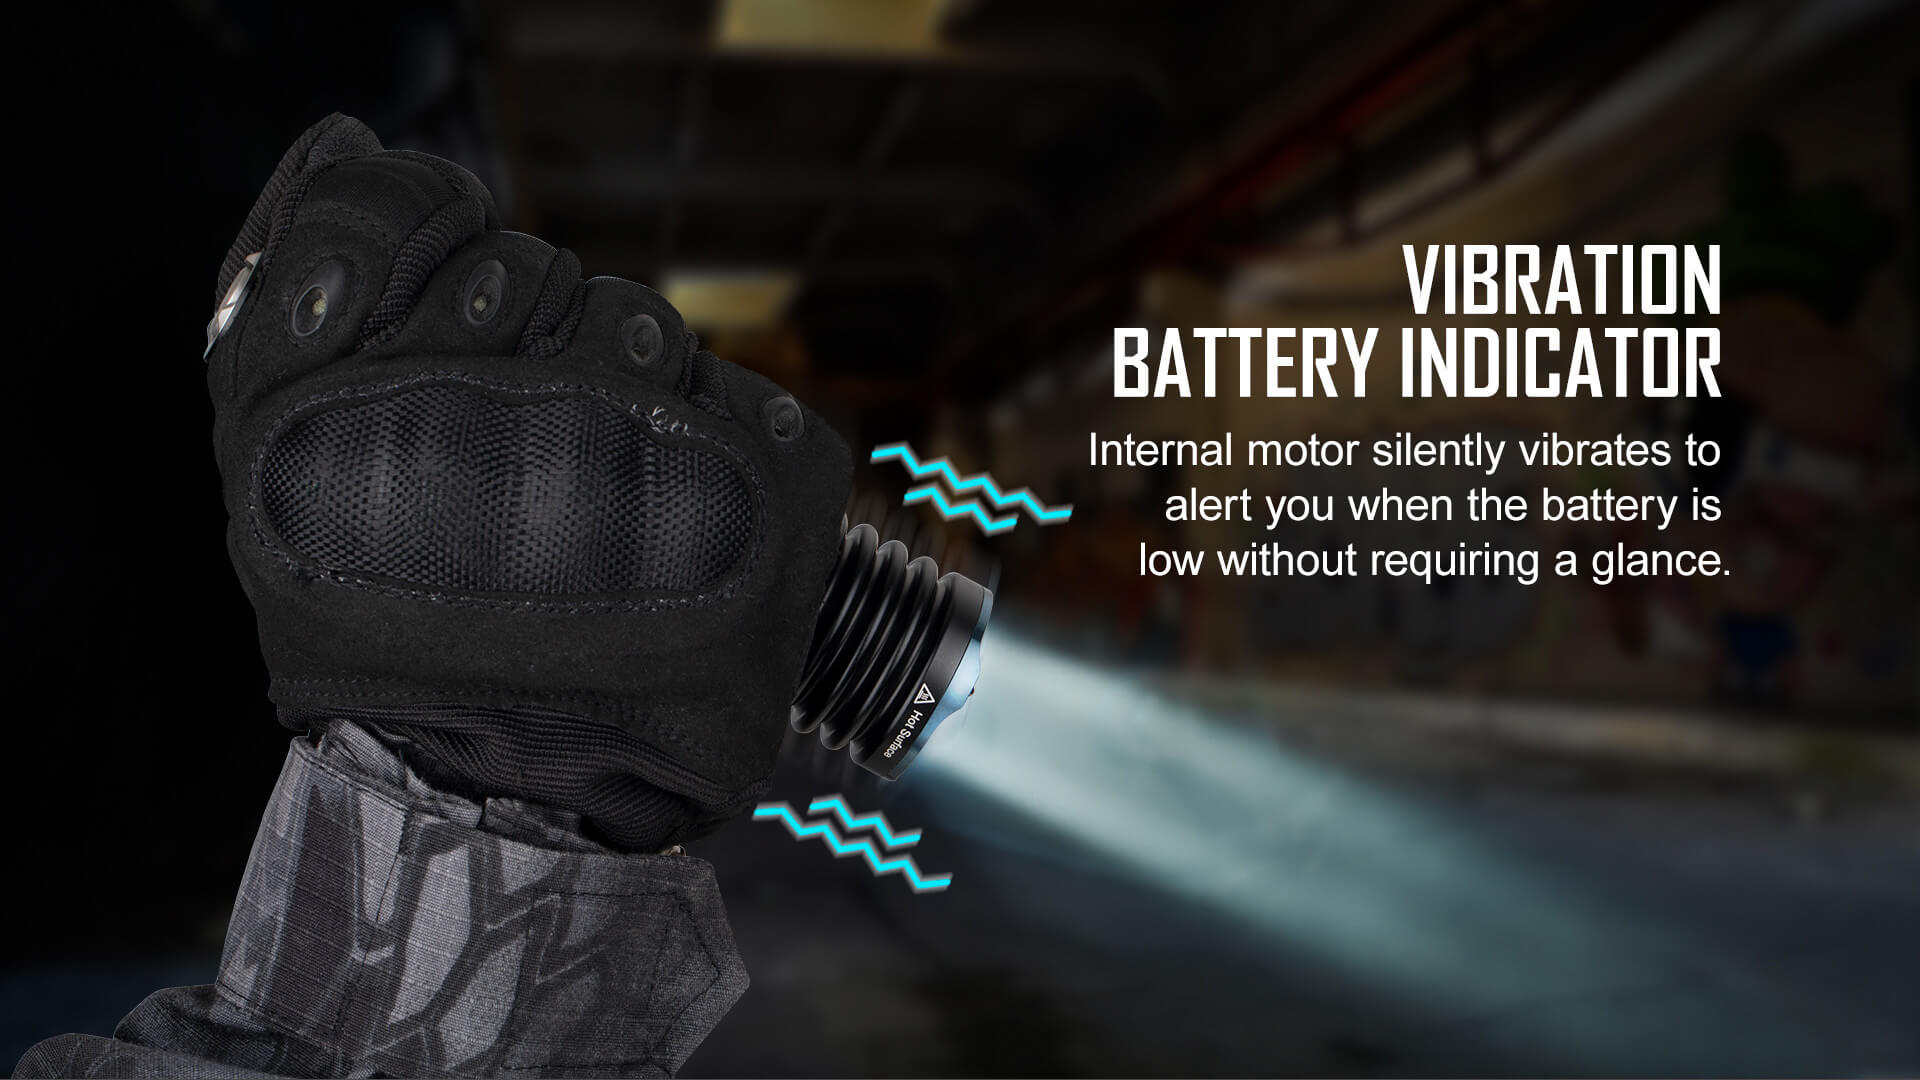 Vibration battery indicator